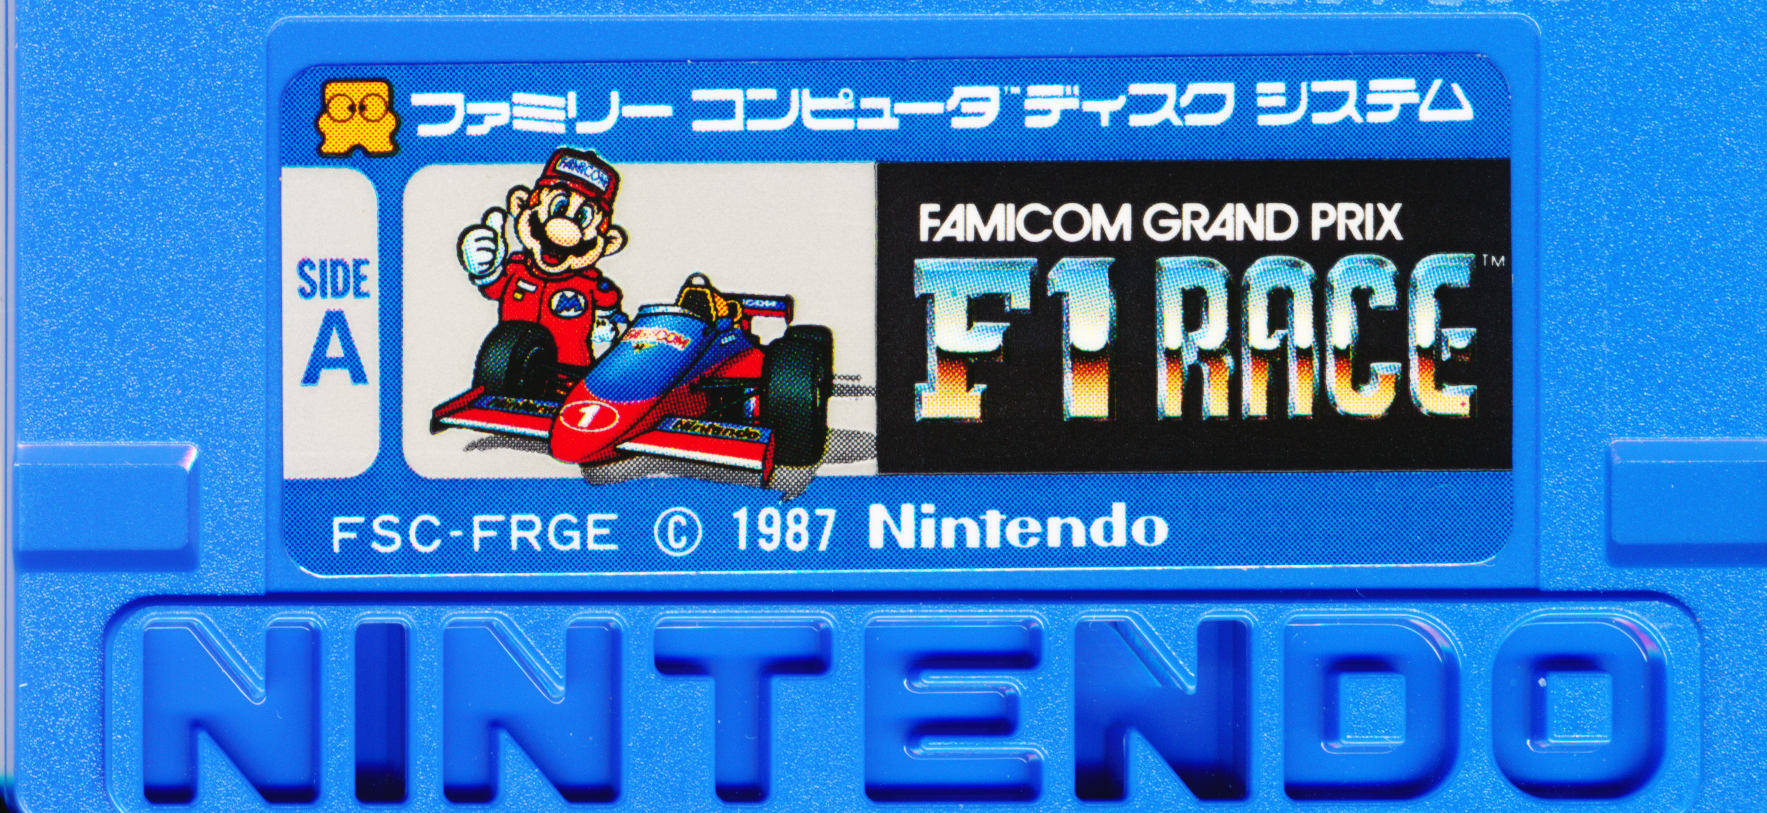 Famicom Grand Prix F1 Race Gaming Alexandria